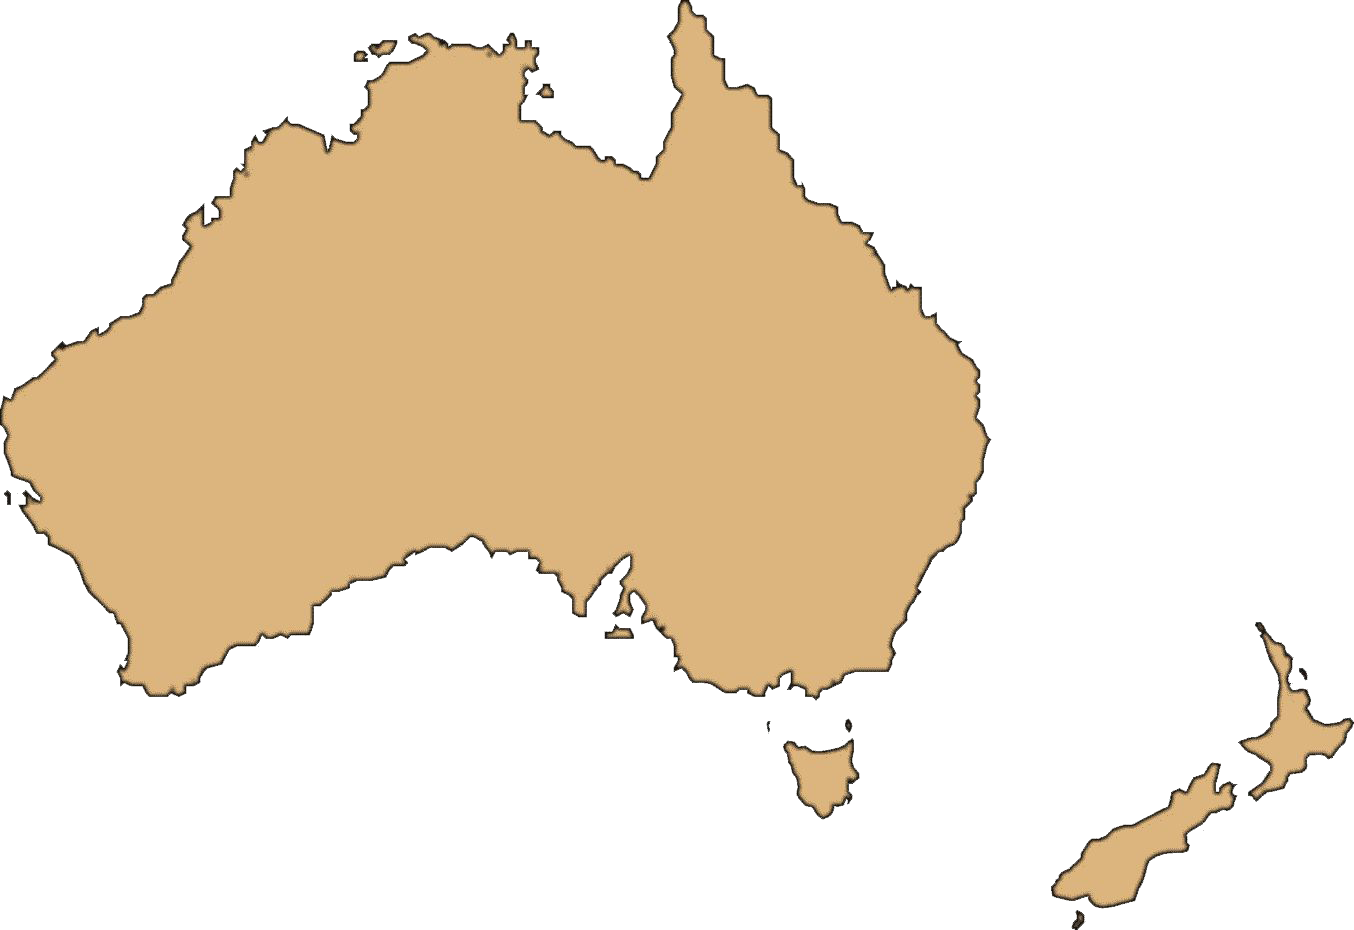 Download Australia Map Transparent Background HQ PNG Image | FreePNGImg